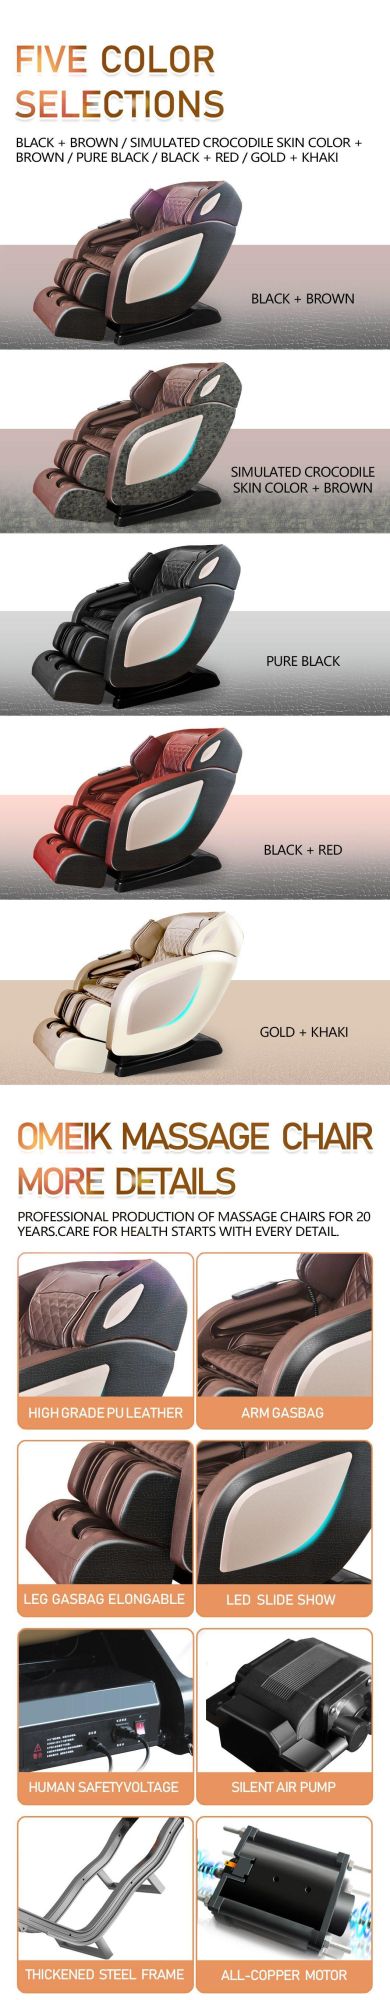 Full Body Zero Gravity Shiatsu Massage Chair with Built-in Heat Massage System